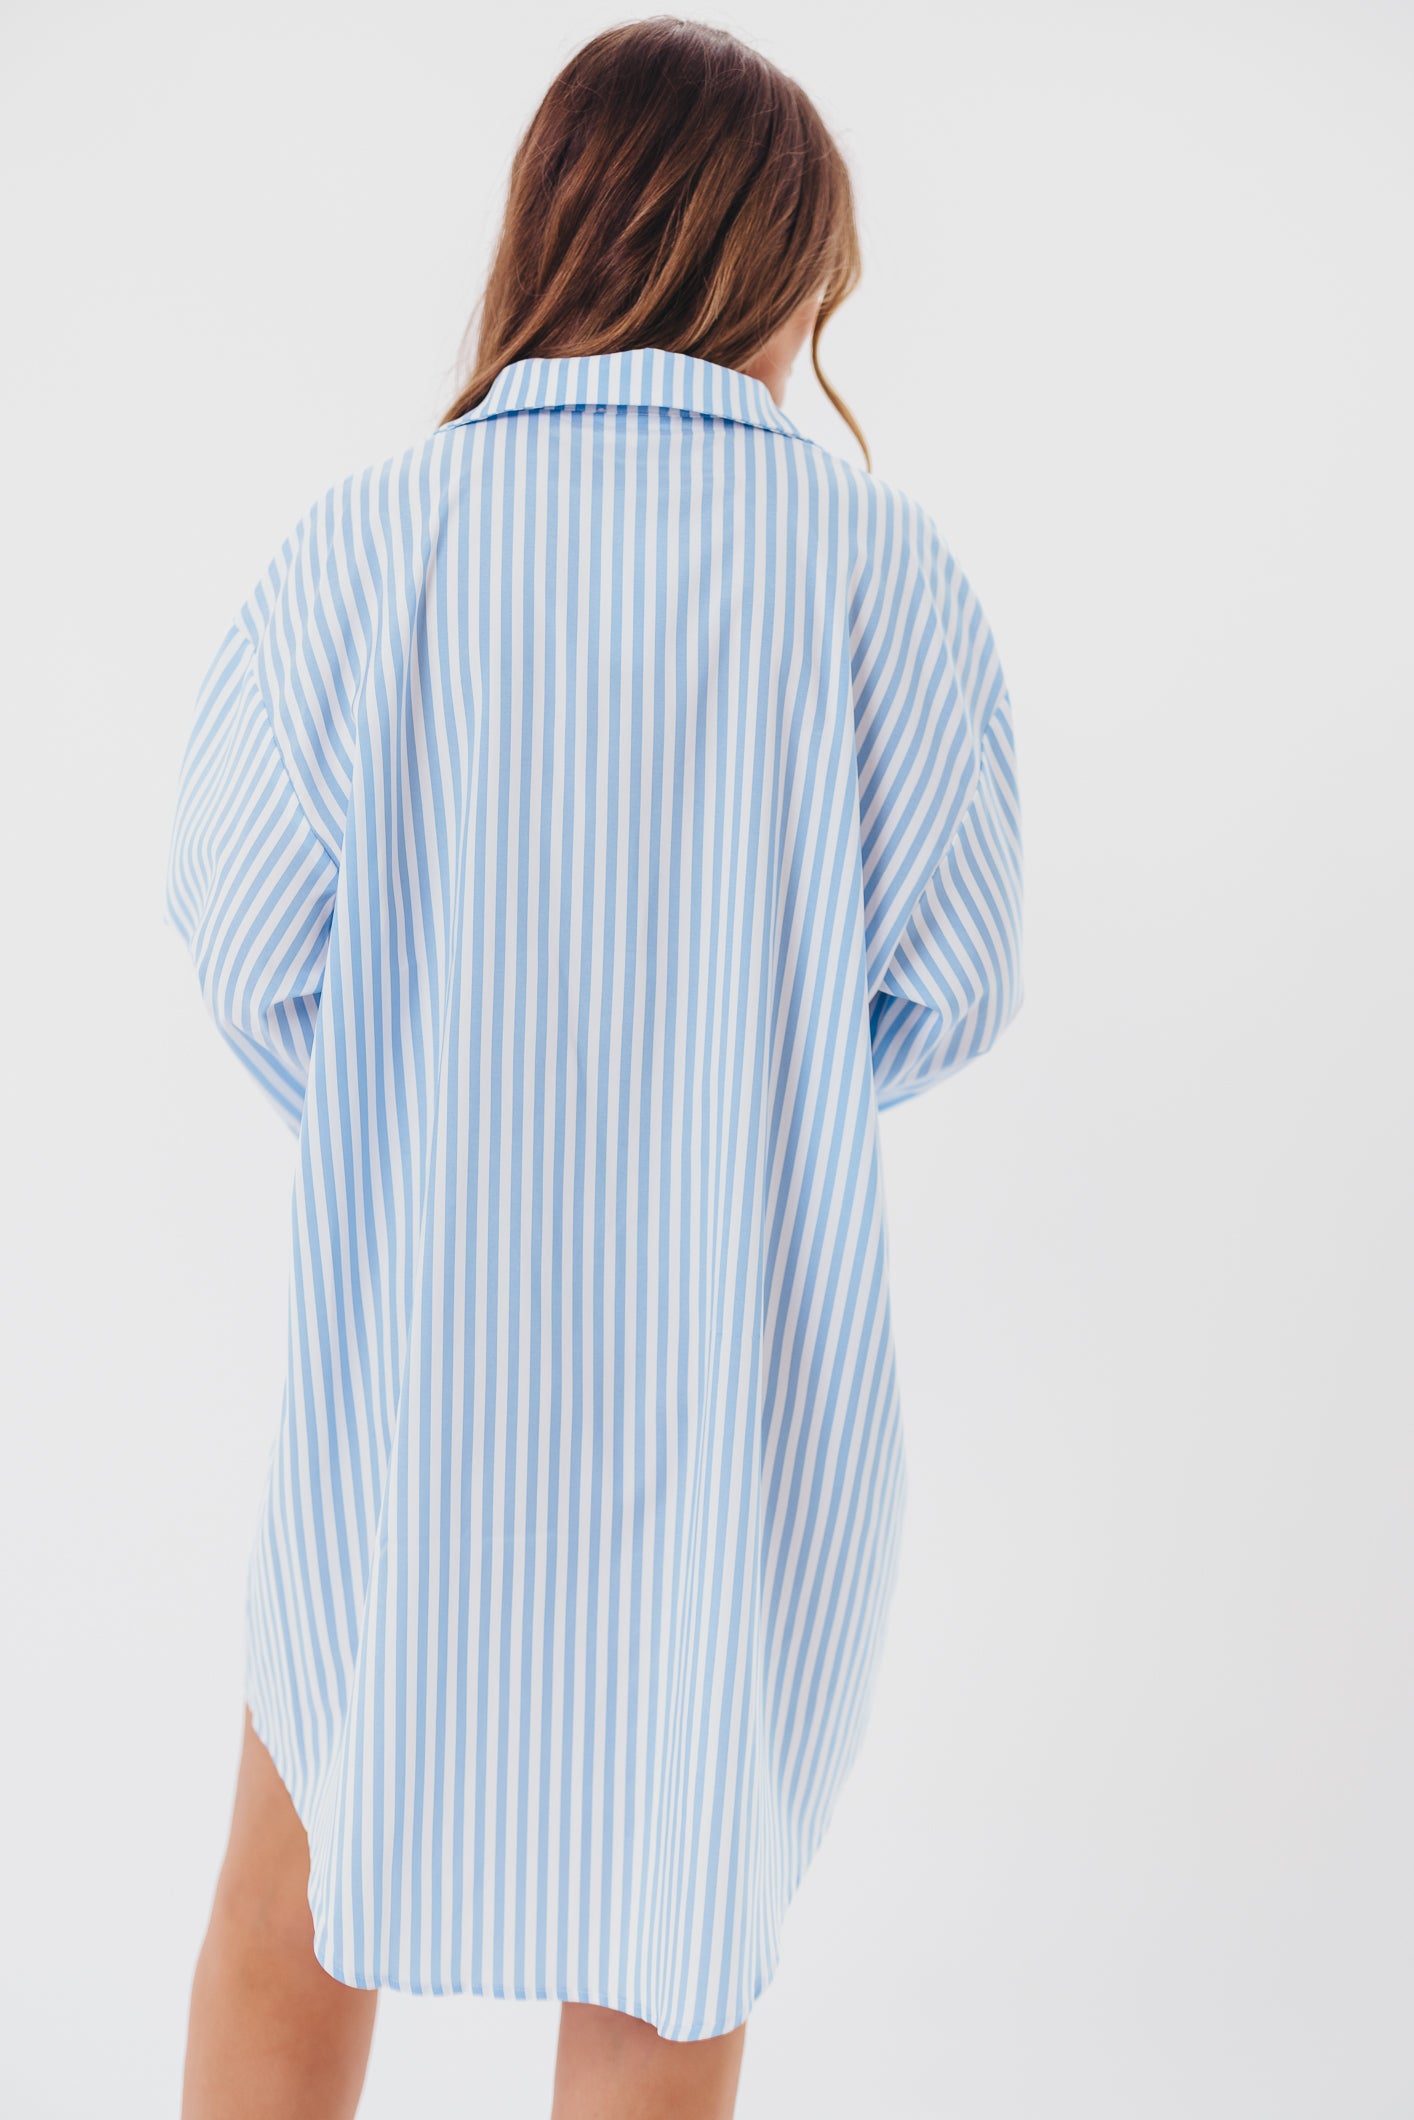 Bellamie Oversized Button-Up Shirt Dress in Sky Blue Stripe - Nursing Friendly